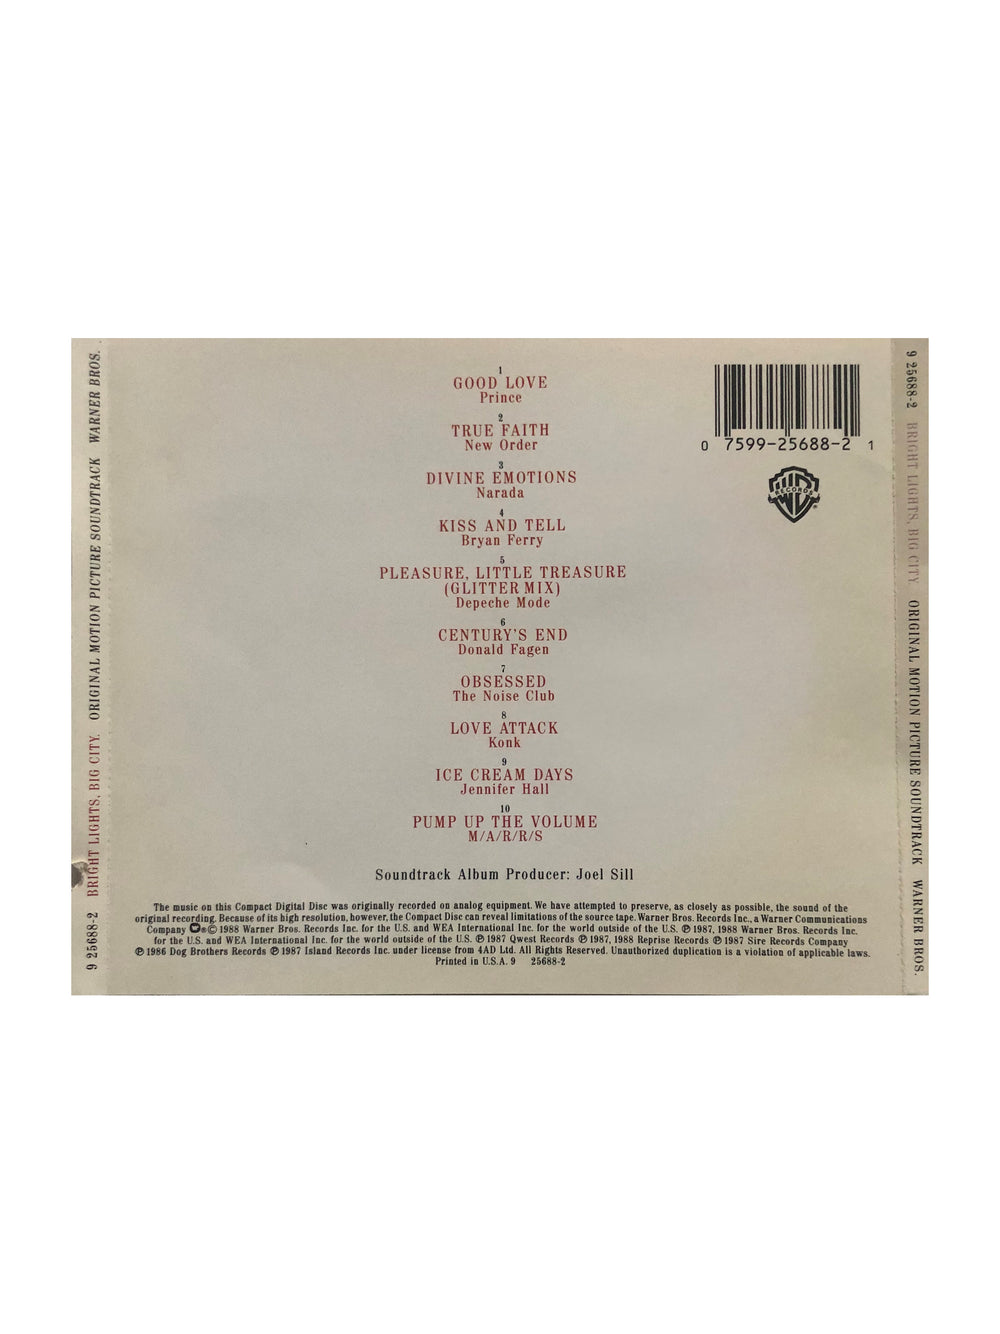 Prince – Bright Lights Big City Soundtrack Featuring Good Love CD Album US Preloved: 1988